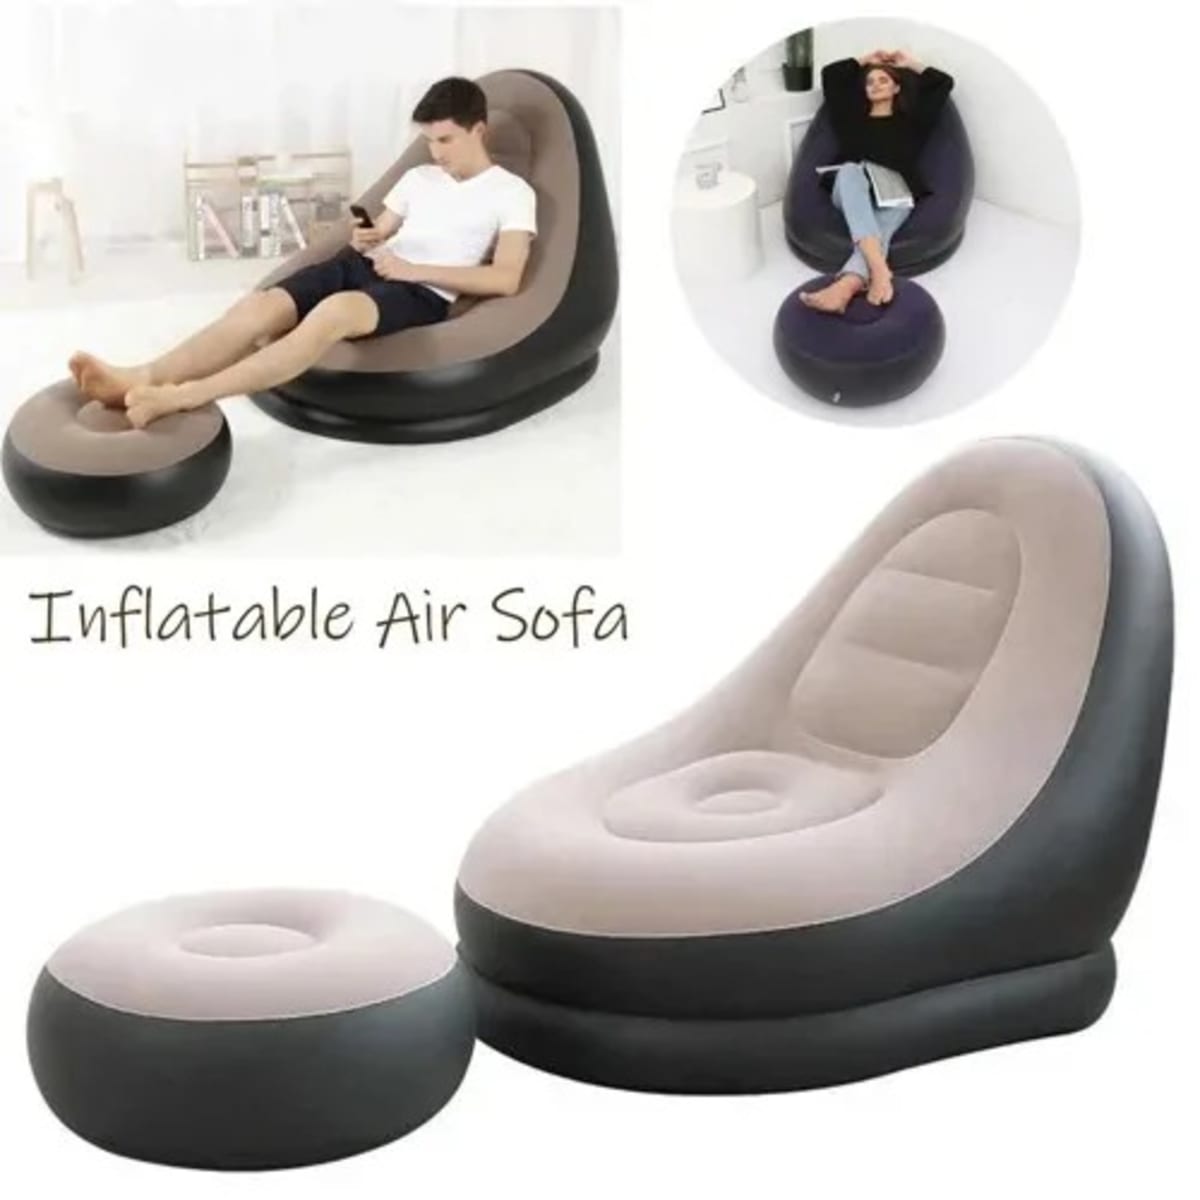 Inflatable Air Sofa With Ottoman